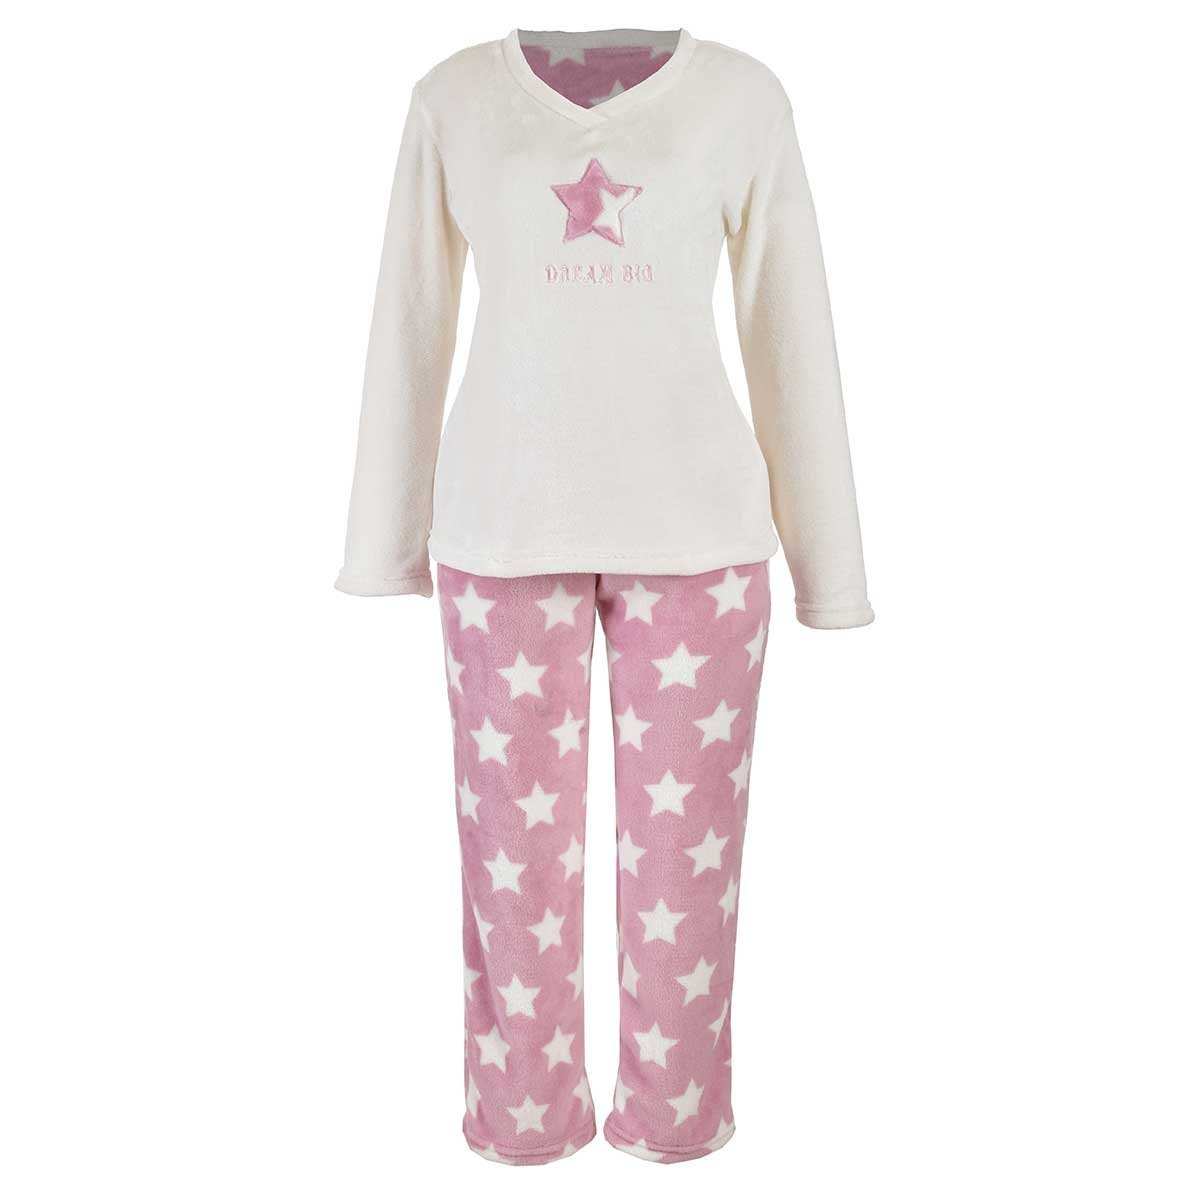 Pijama Flannel Playera Pantal&oacute;n Y Antifaz Isotoner